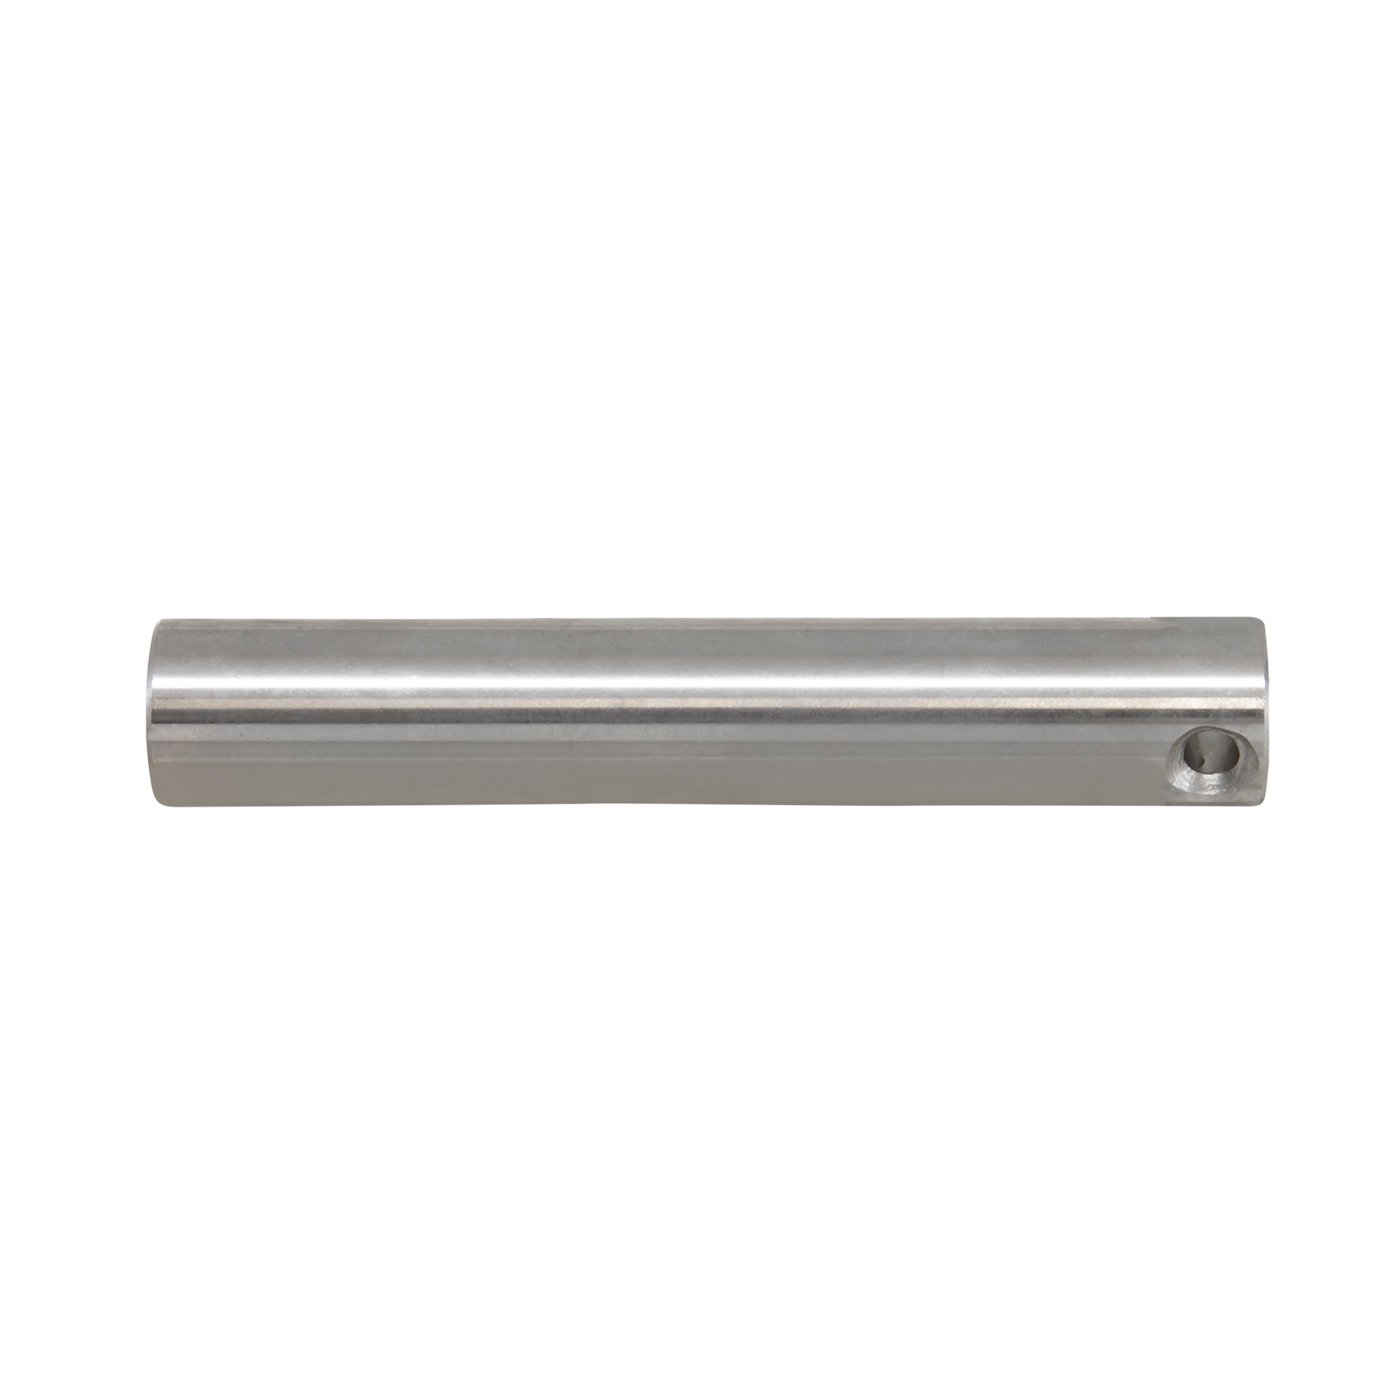 Model 35 Tracloc & Standard Open Cross Pin Shaft, Bolt Design, 0.716 in. Dia.